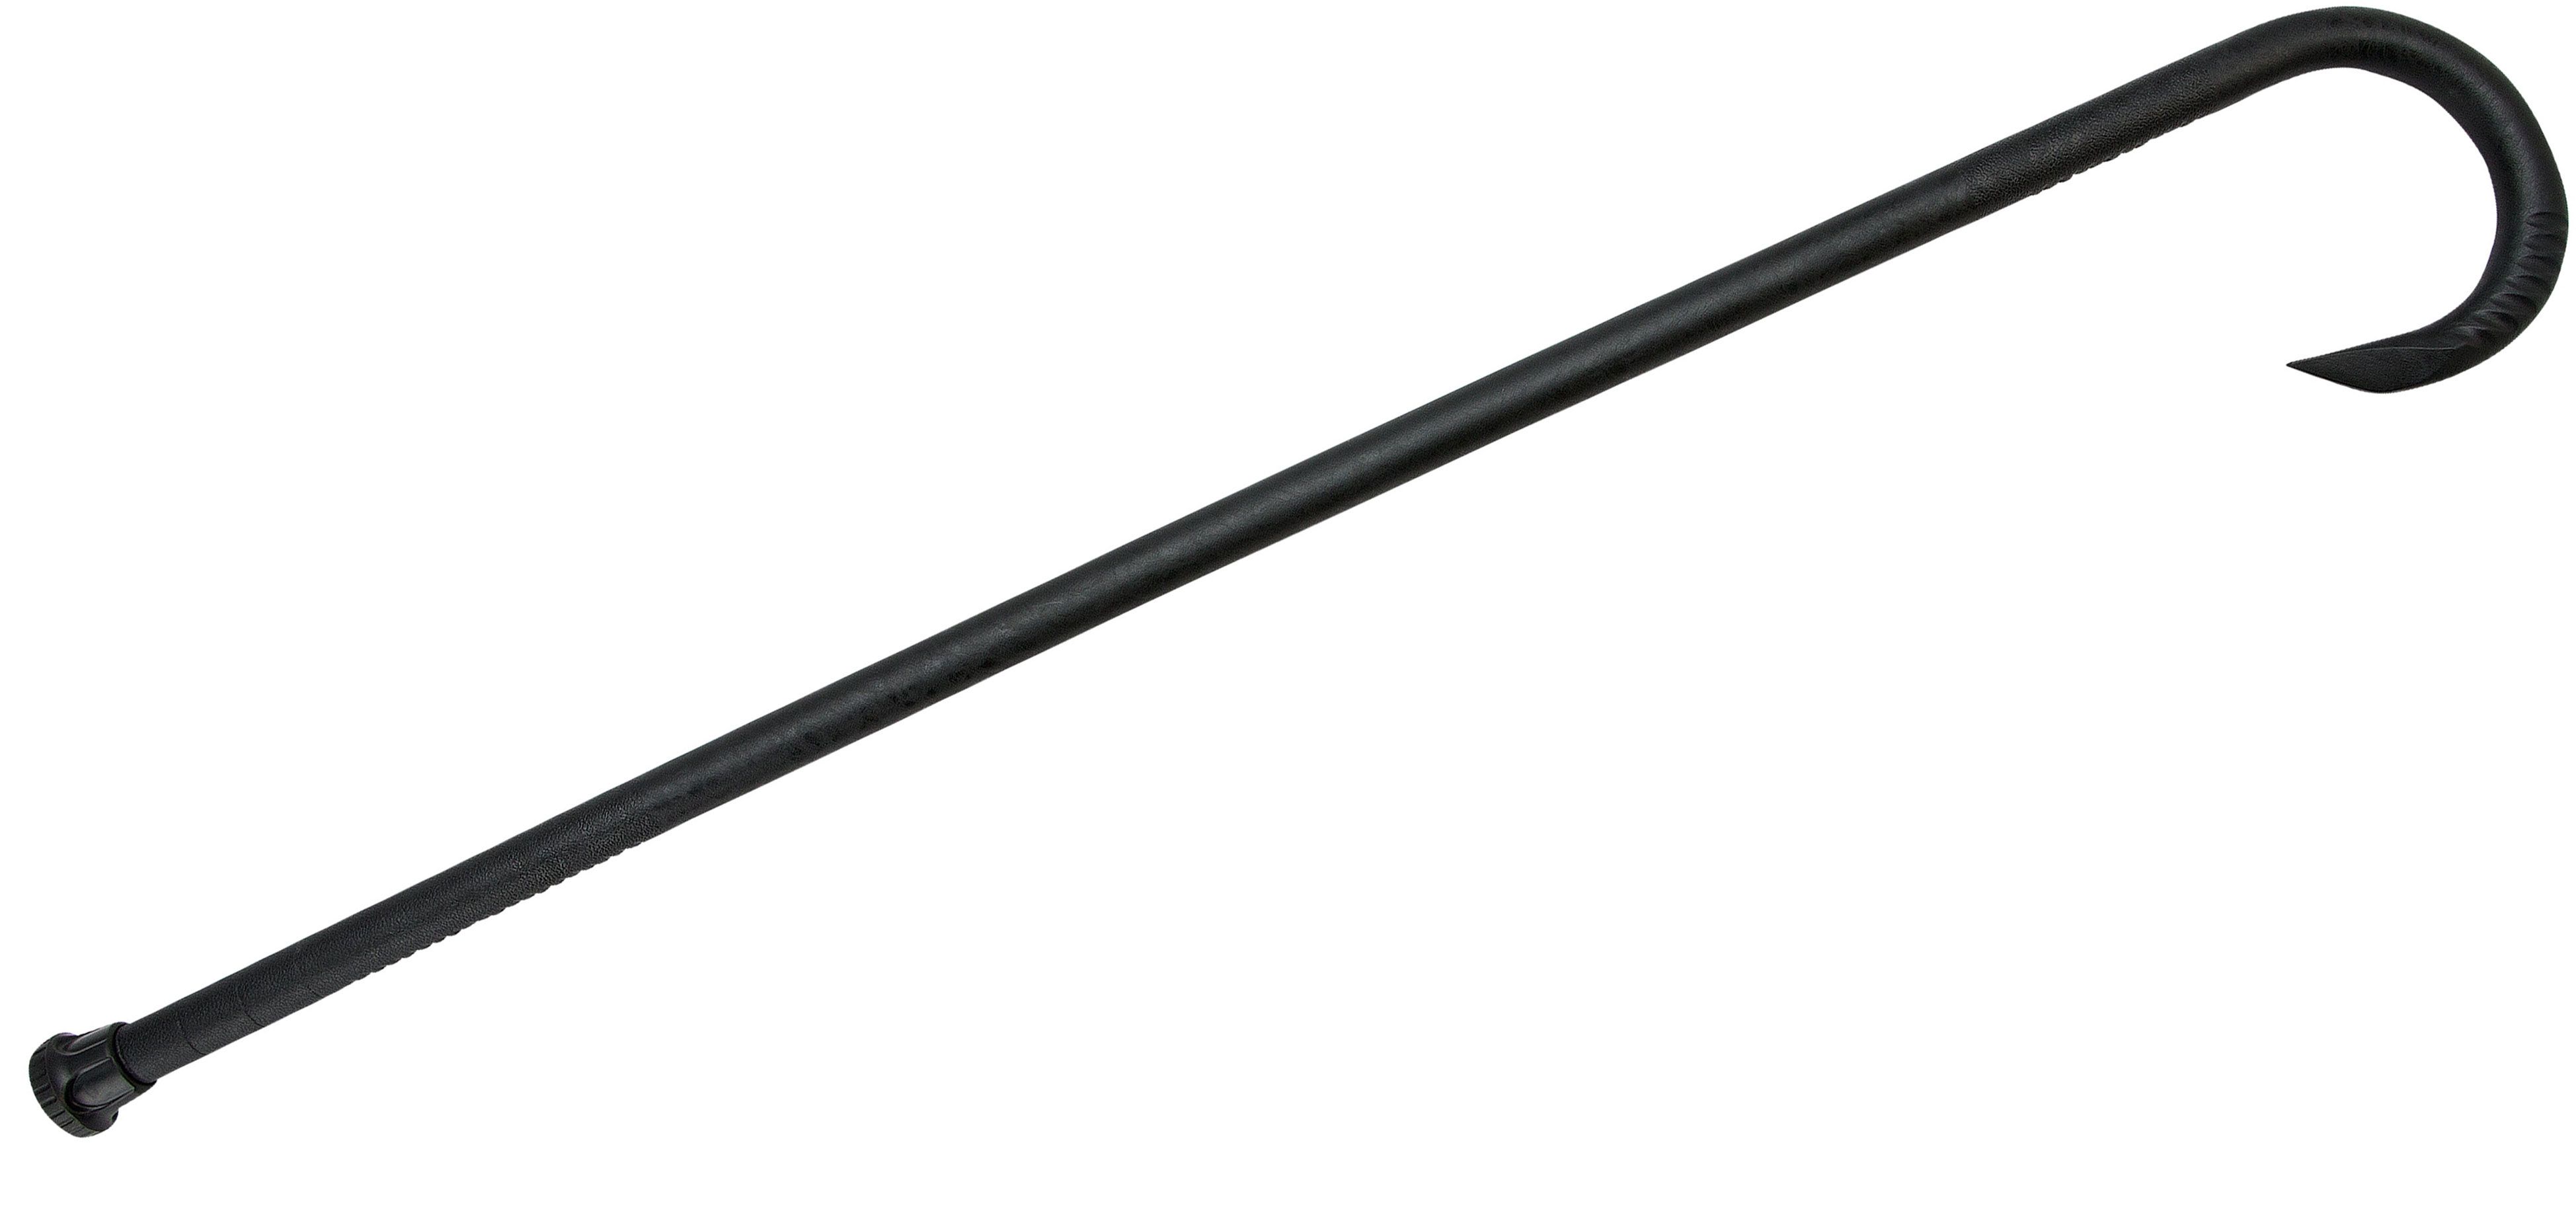 United Cutlery Defense Premium Adjustable Walking Cane 39 Overall